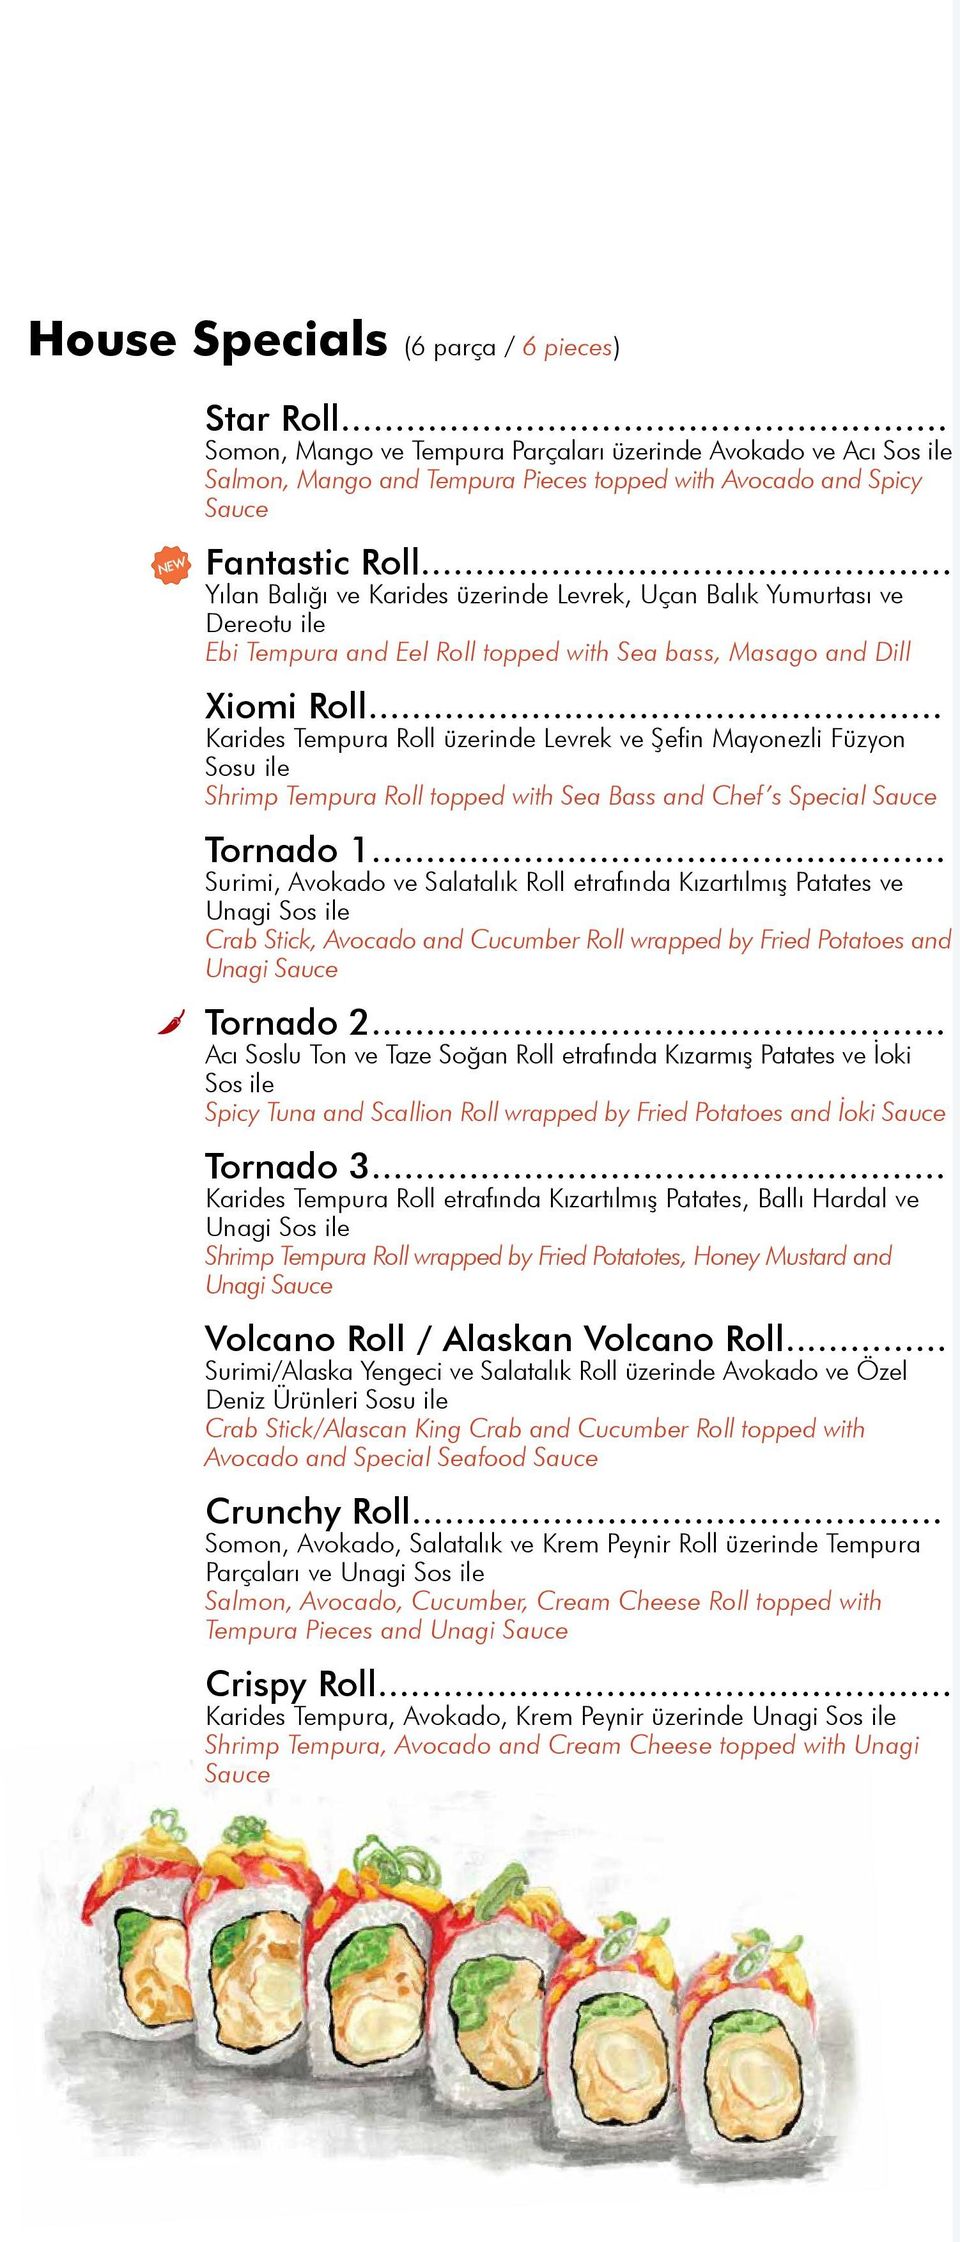 .. Karides Tempura Roll üzerinde Levrek ve Şefin Mayonezli Füzyon Sosu ile Shrimp Tempura Roll topped with Sea Bass and Chef s Special Sauce Tornado 1.